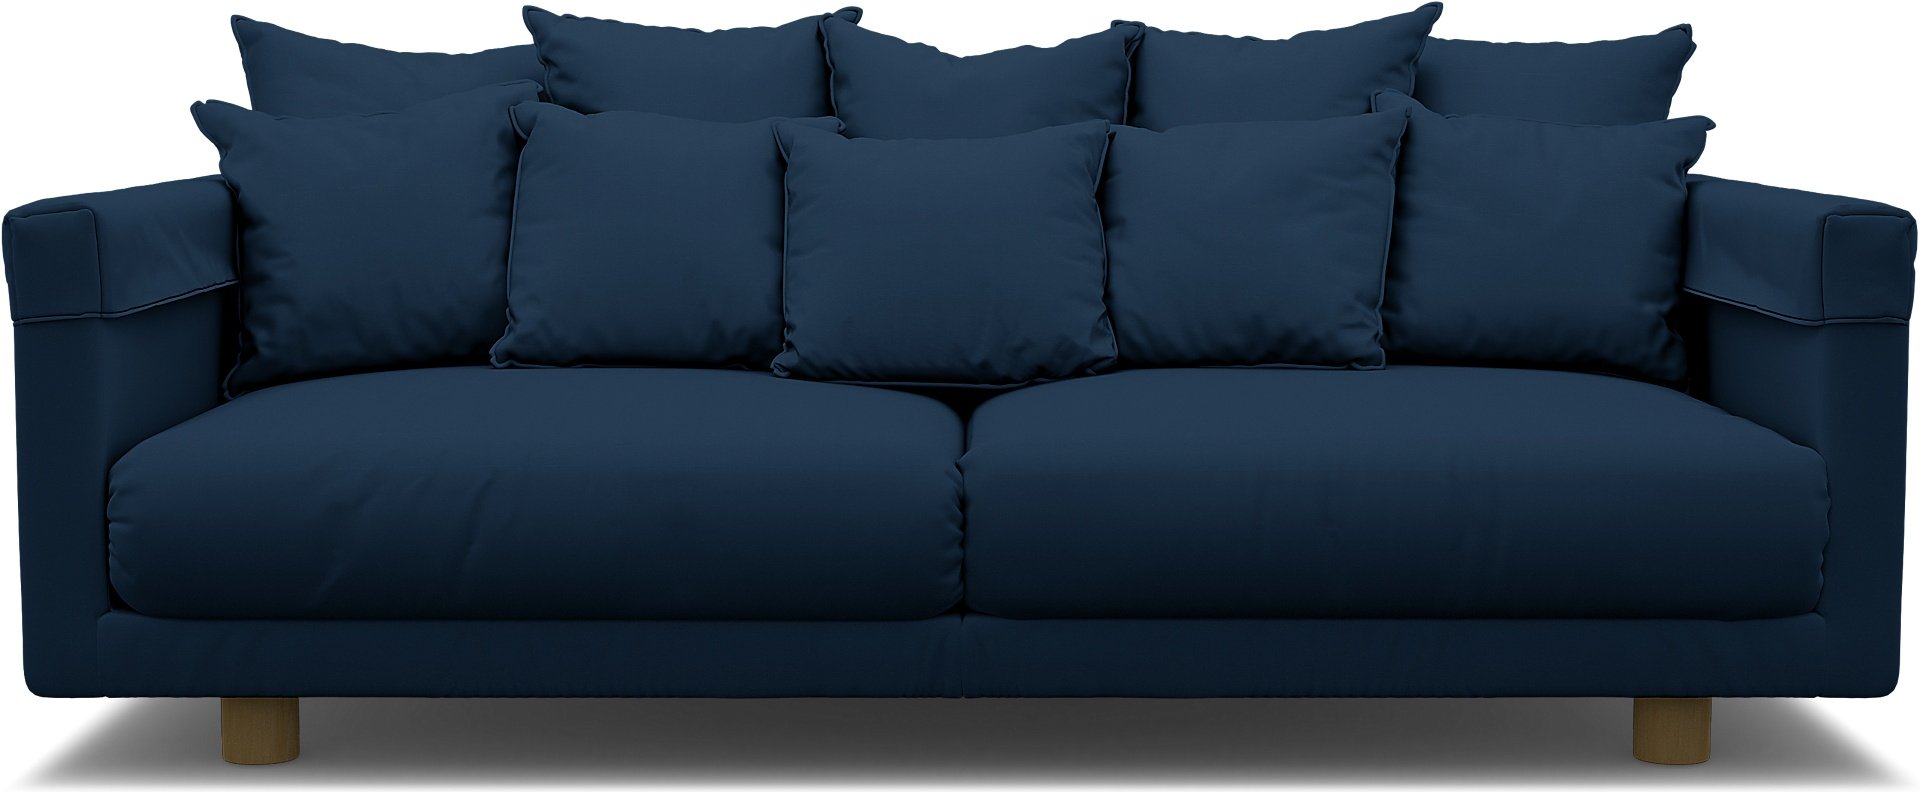 IKEA - Stockholm 2017 3 Seater Sofa Cover, Deep Navy Blue, Cotton - Bemz